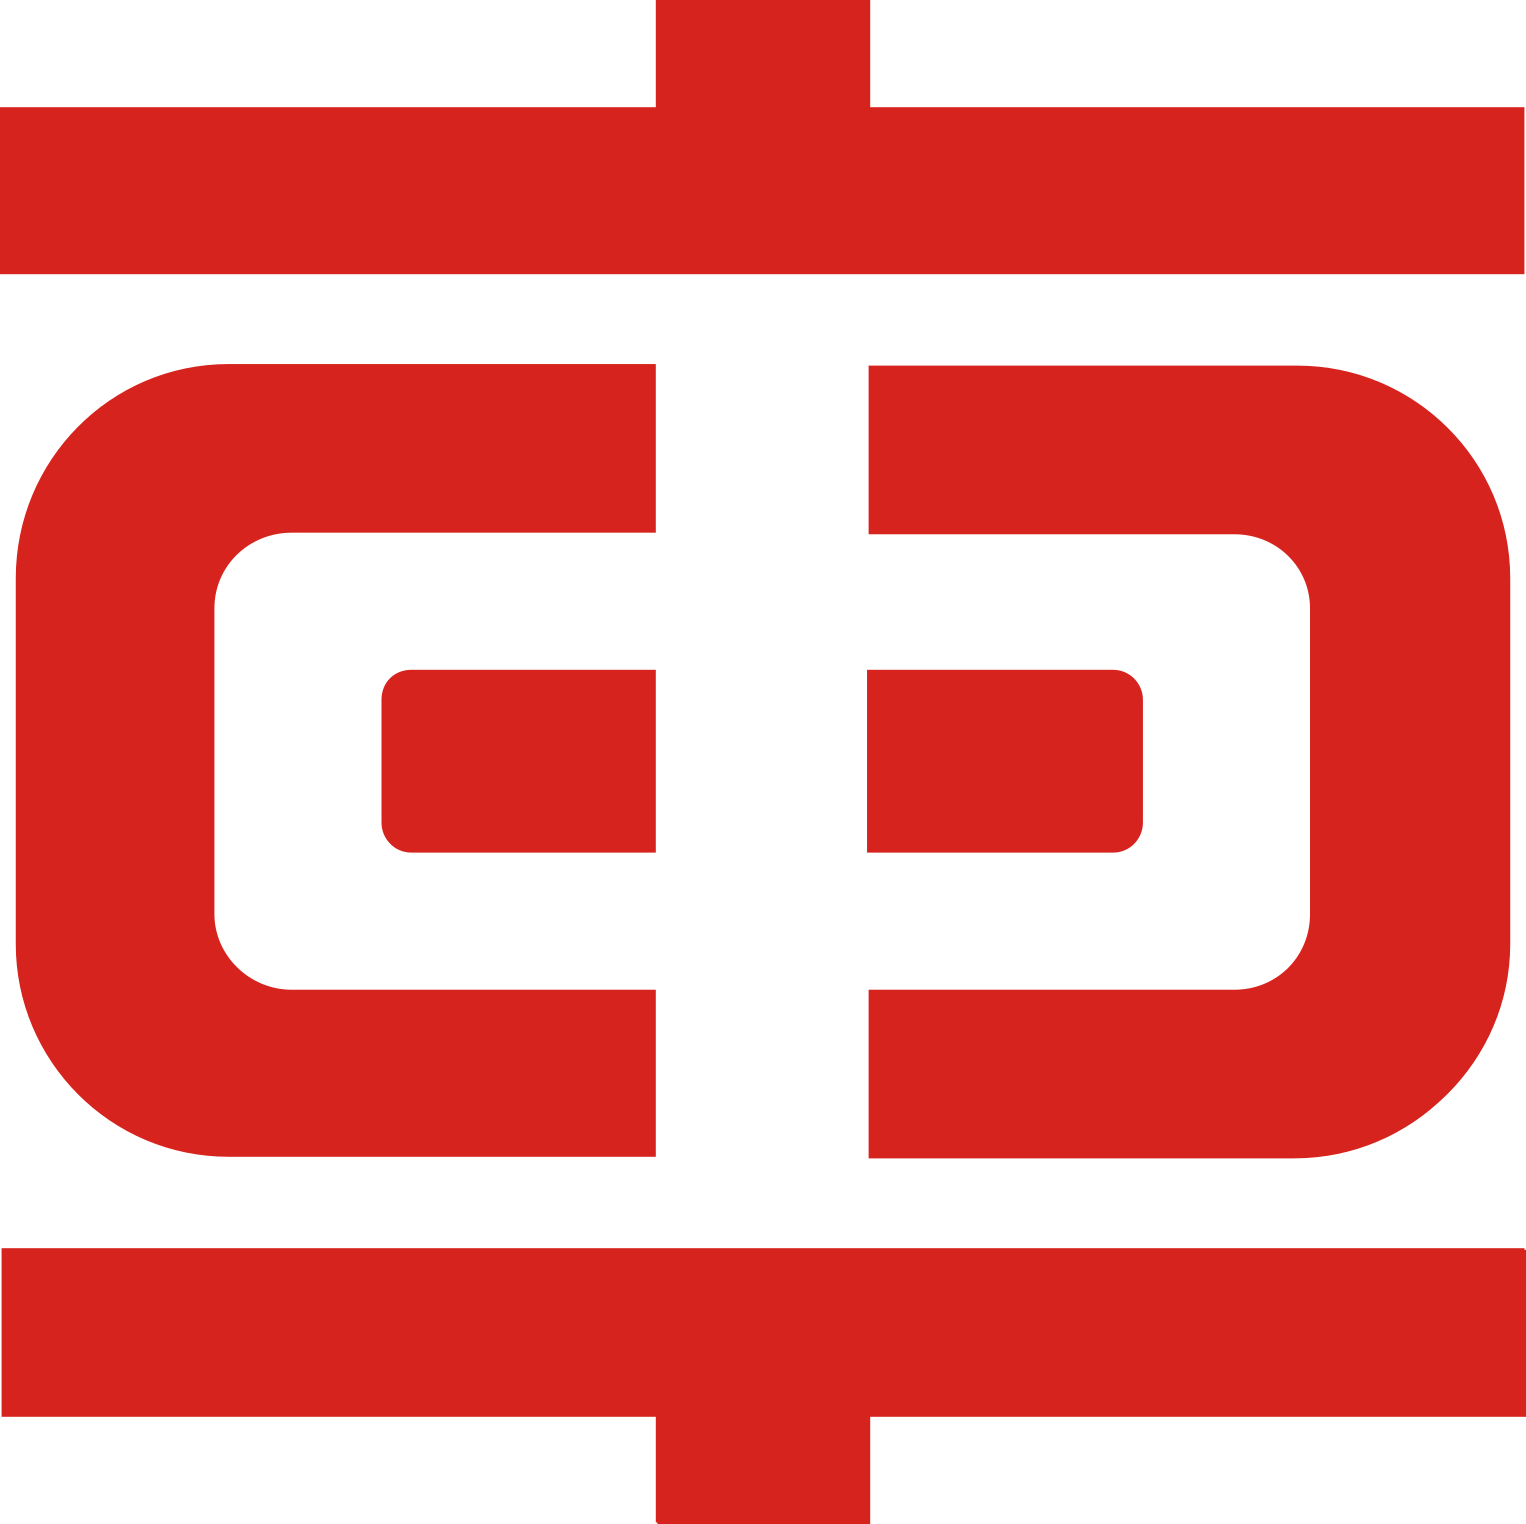 Zhuzhou CRRC Times Electric logo (PNG transparent)